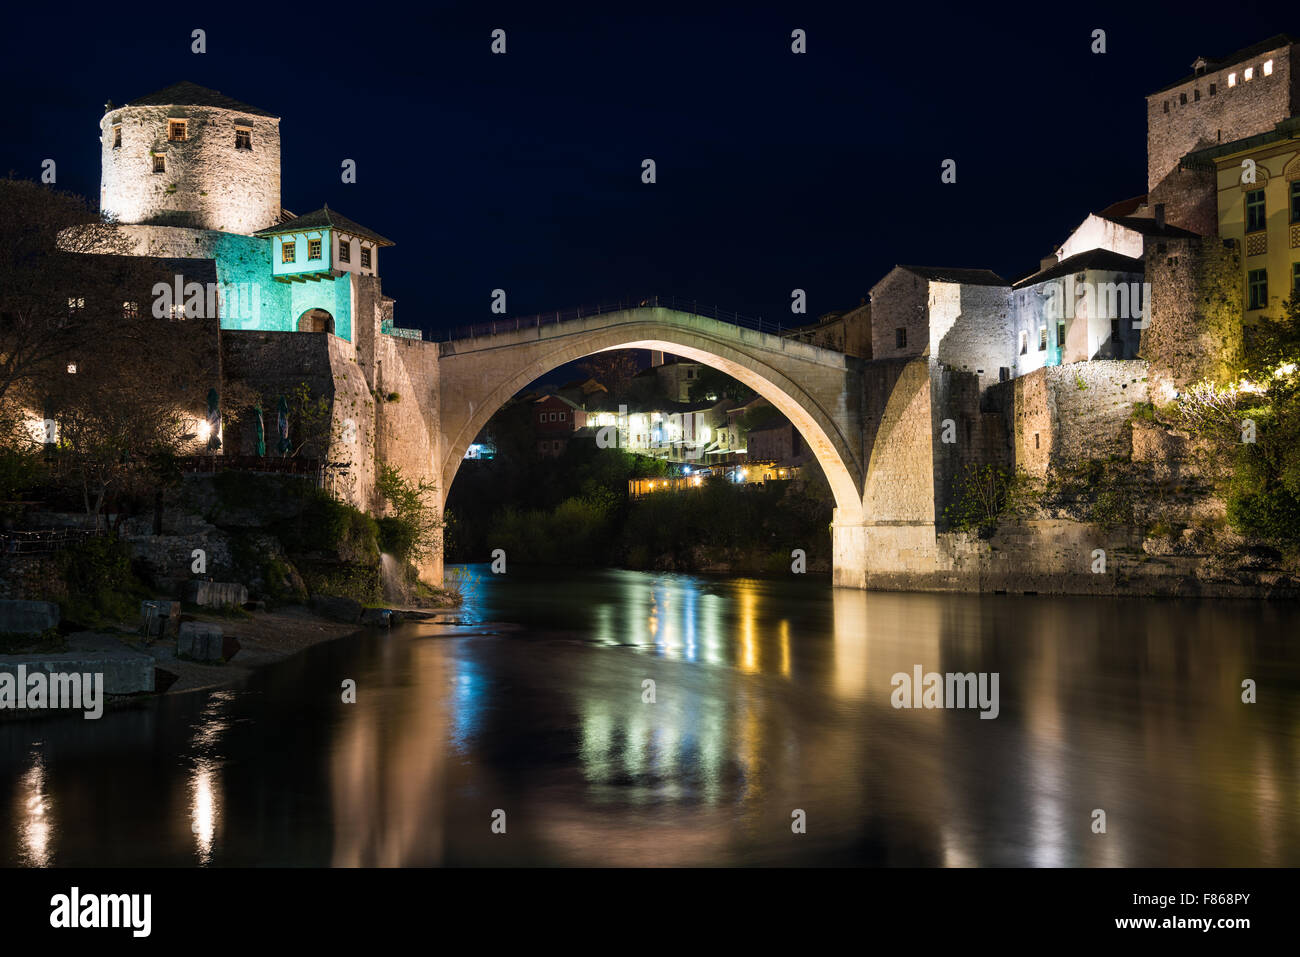 The Old Bridge in Mostar at night, Bosnia and Herzegovina Stock Photo